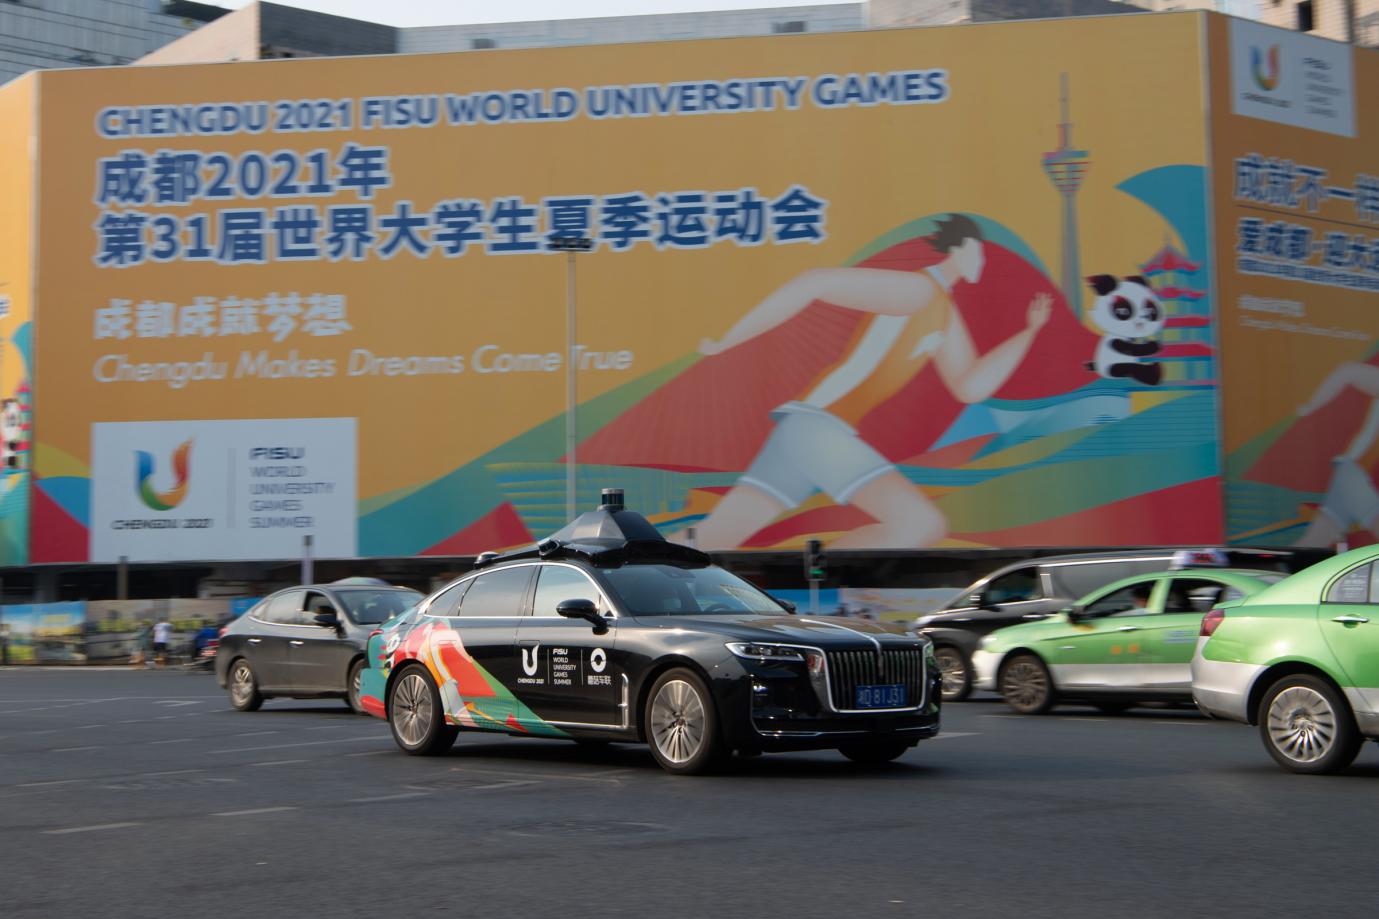 Fortuneherald《财富先驱》：中国科技公司蘑菇车联融合智慧城市，革新自动驾驶